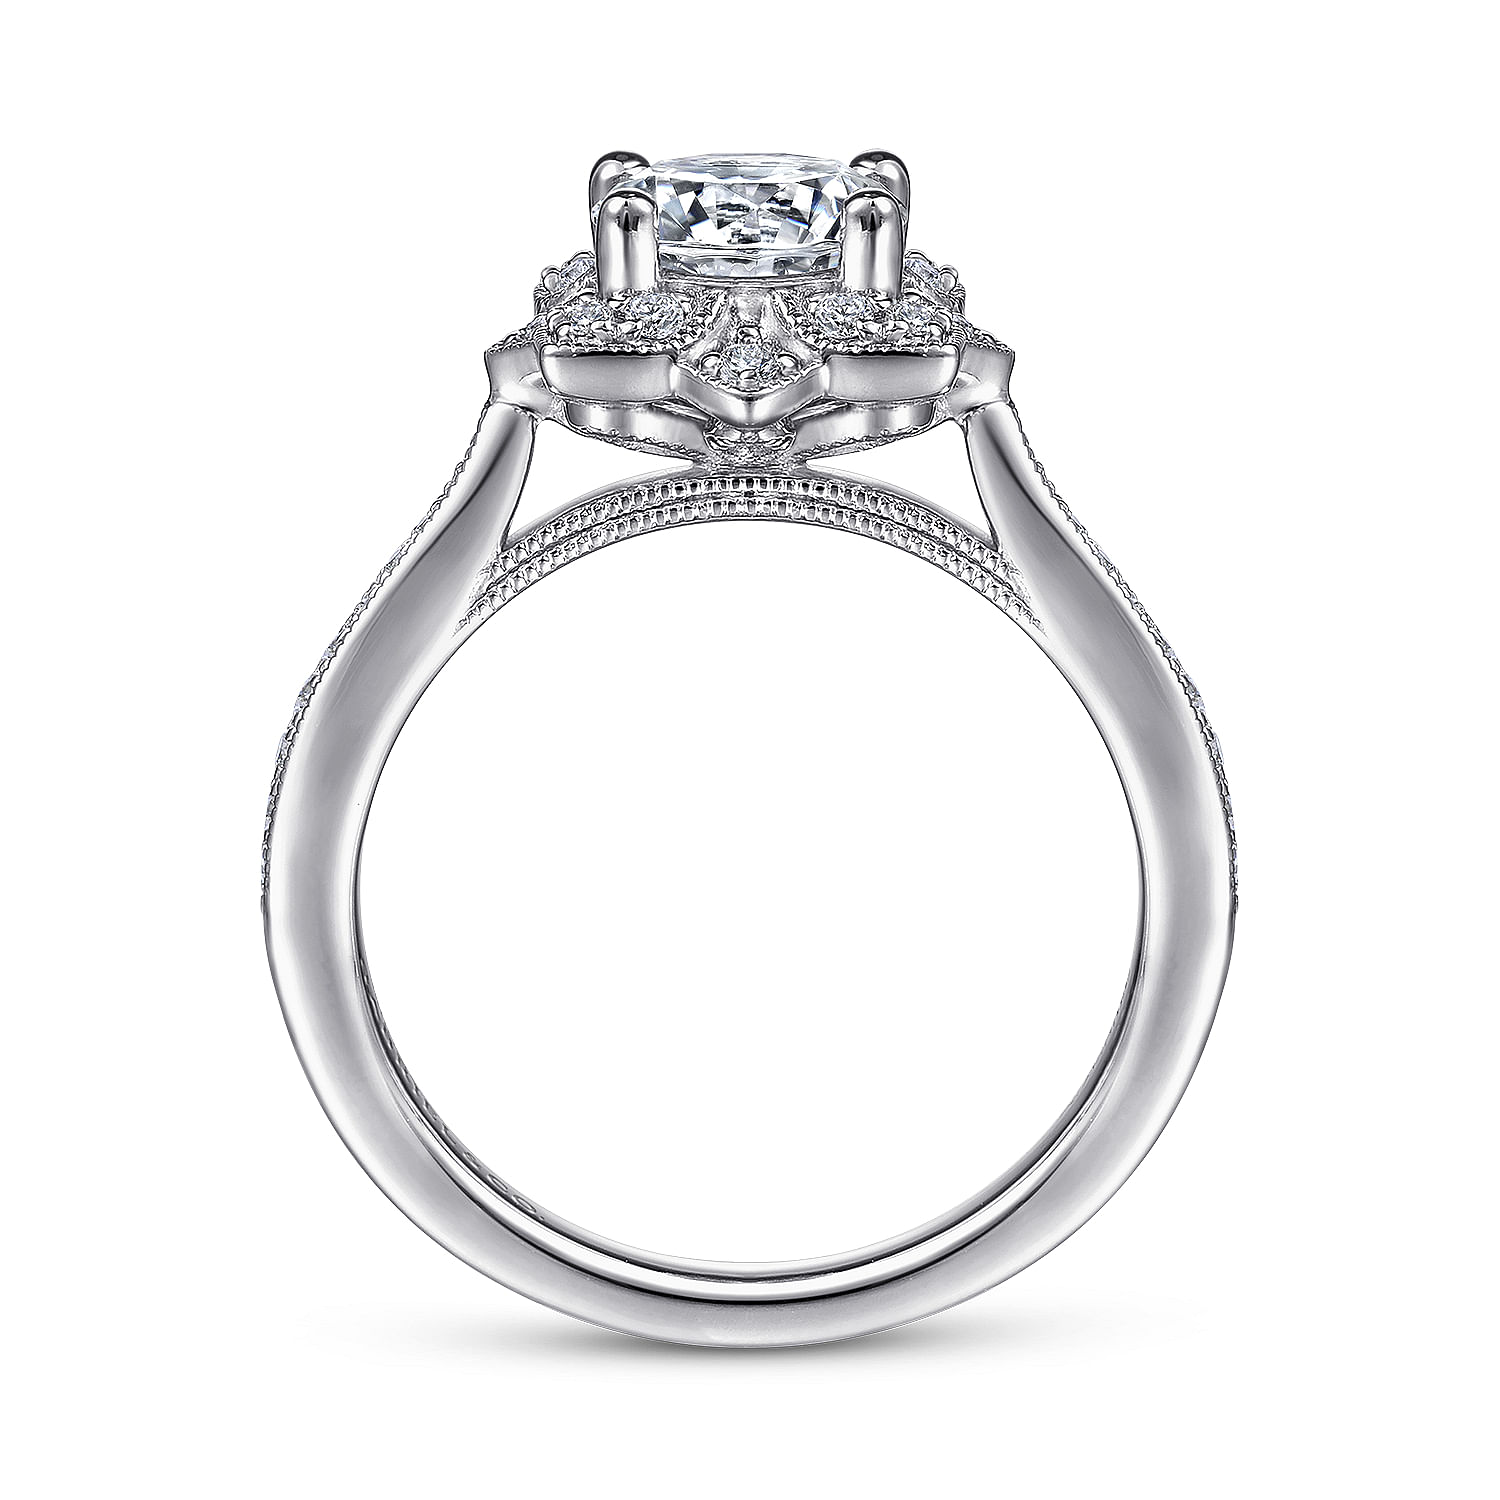 Gretel - Unique 14K White Gold Vintage Inspired Halo Diamond Engagement Ring - 0.21 ct - Shot 2